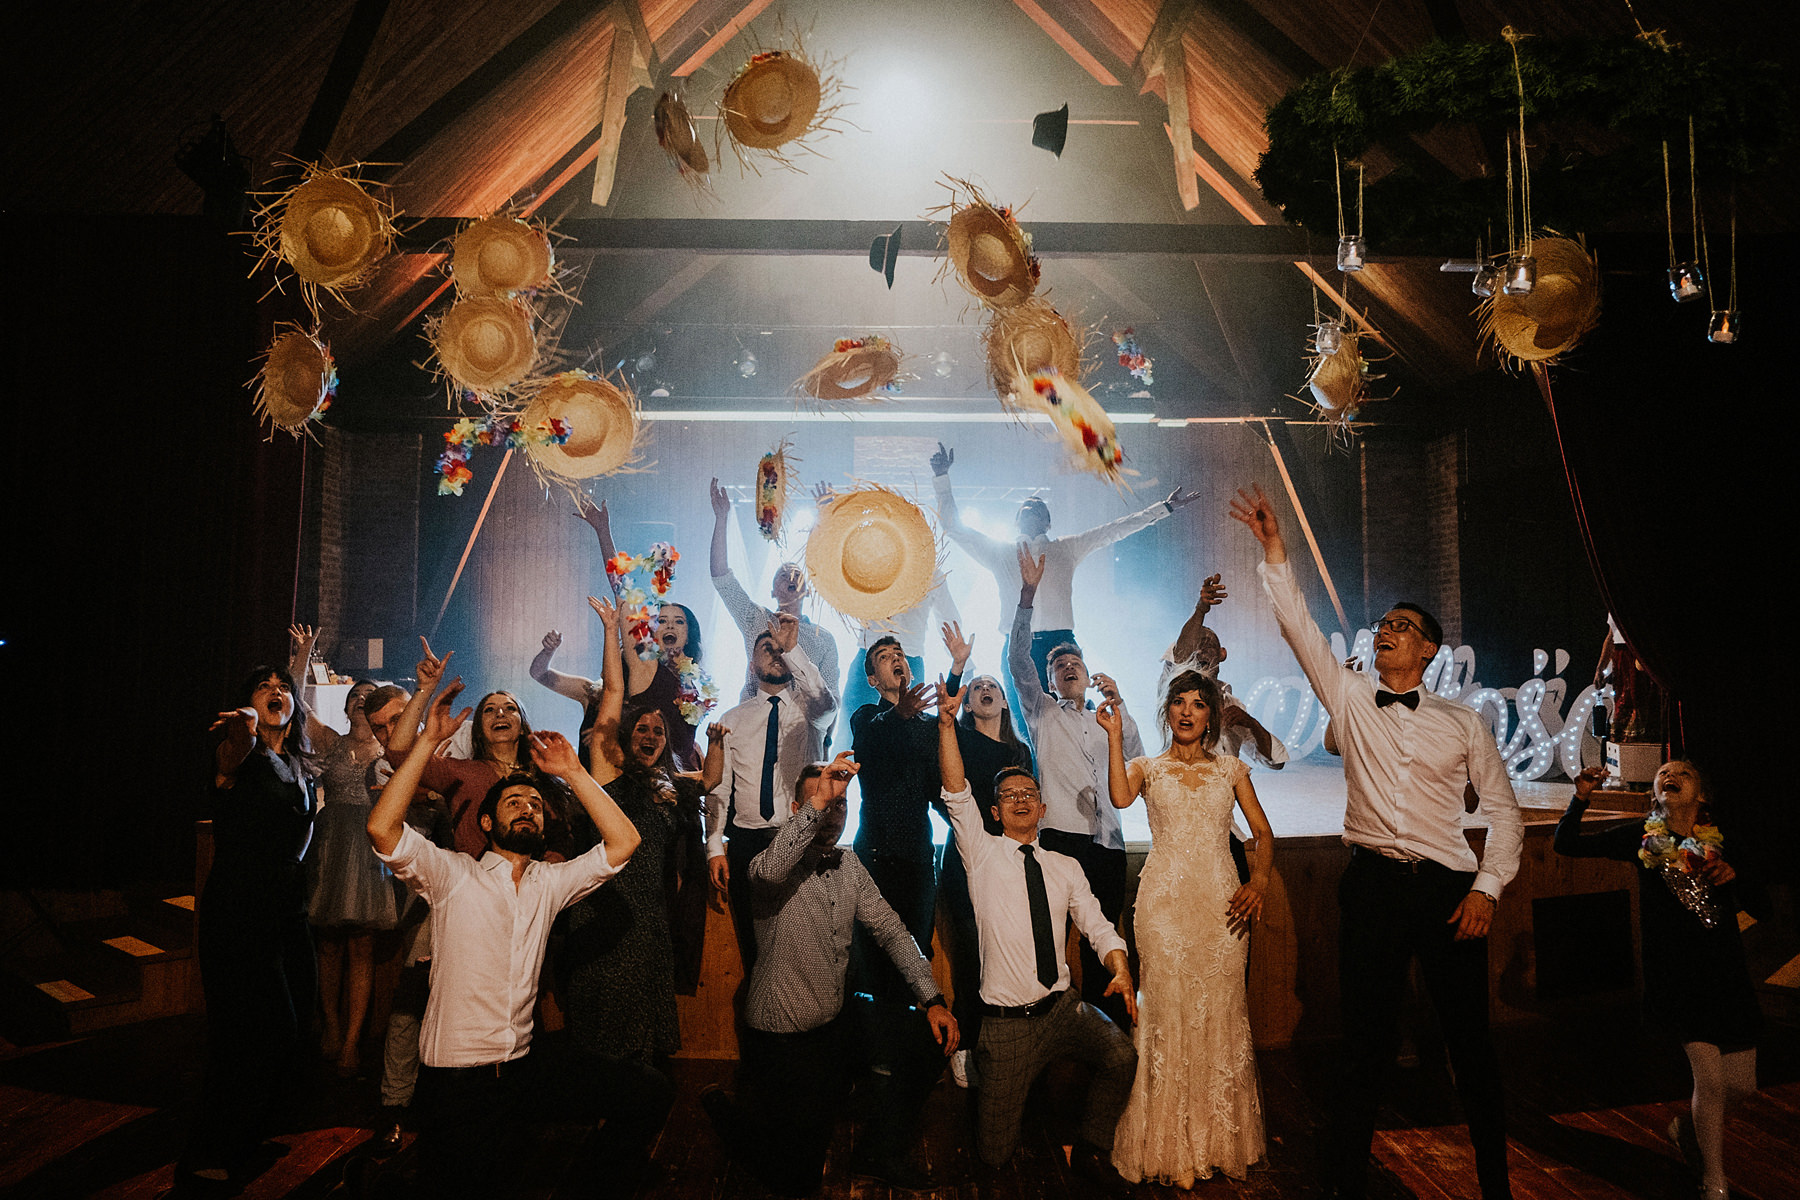 Wedding in the barn – Stodola Centrum Paderewskiego Kasna Dolna